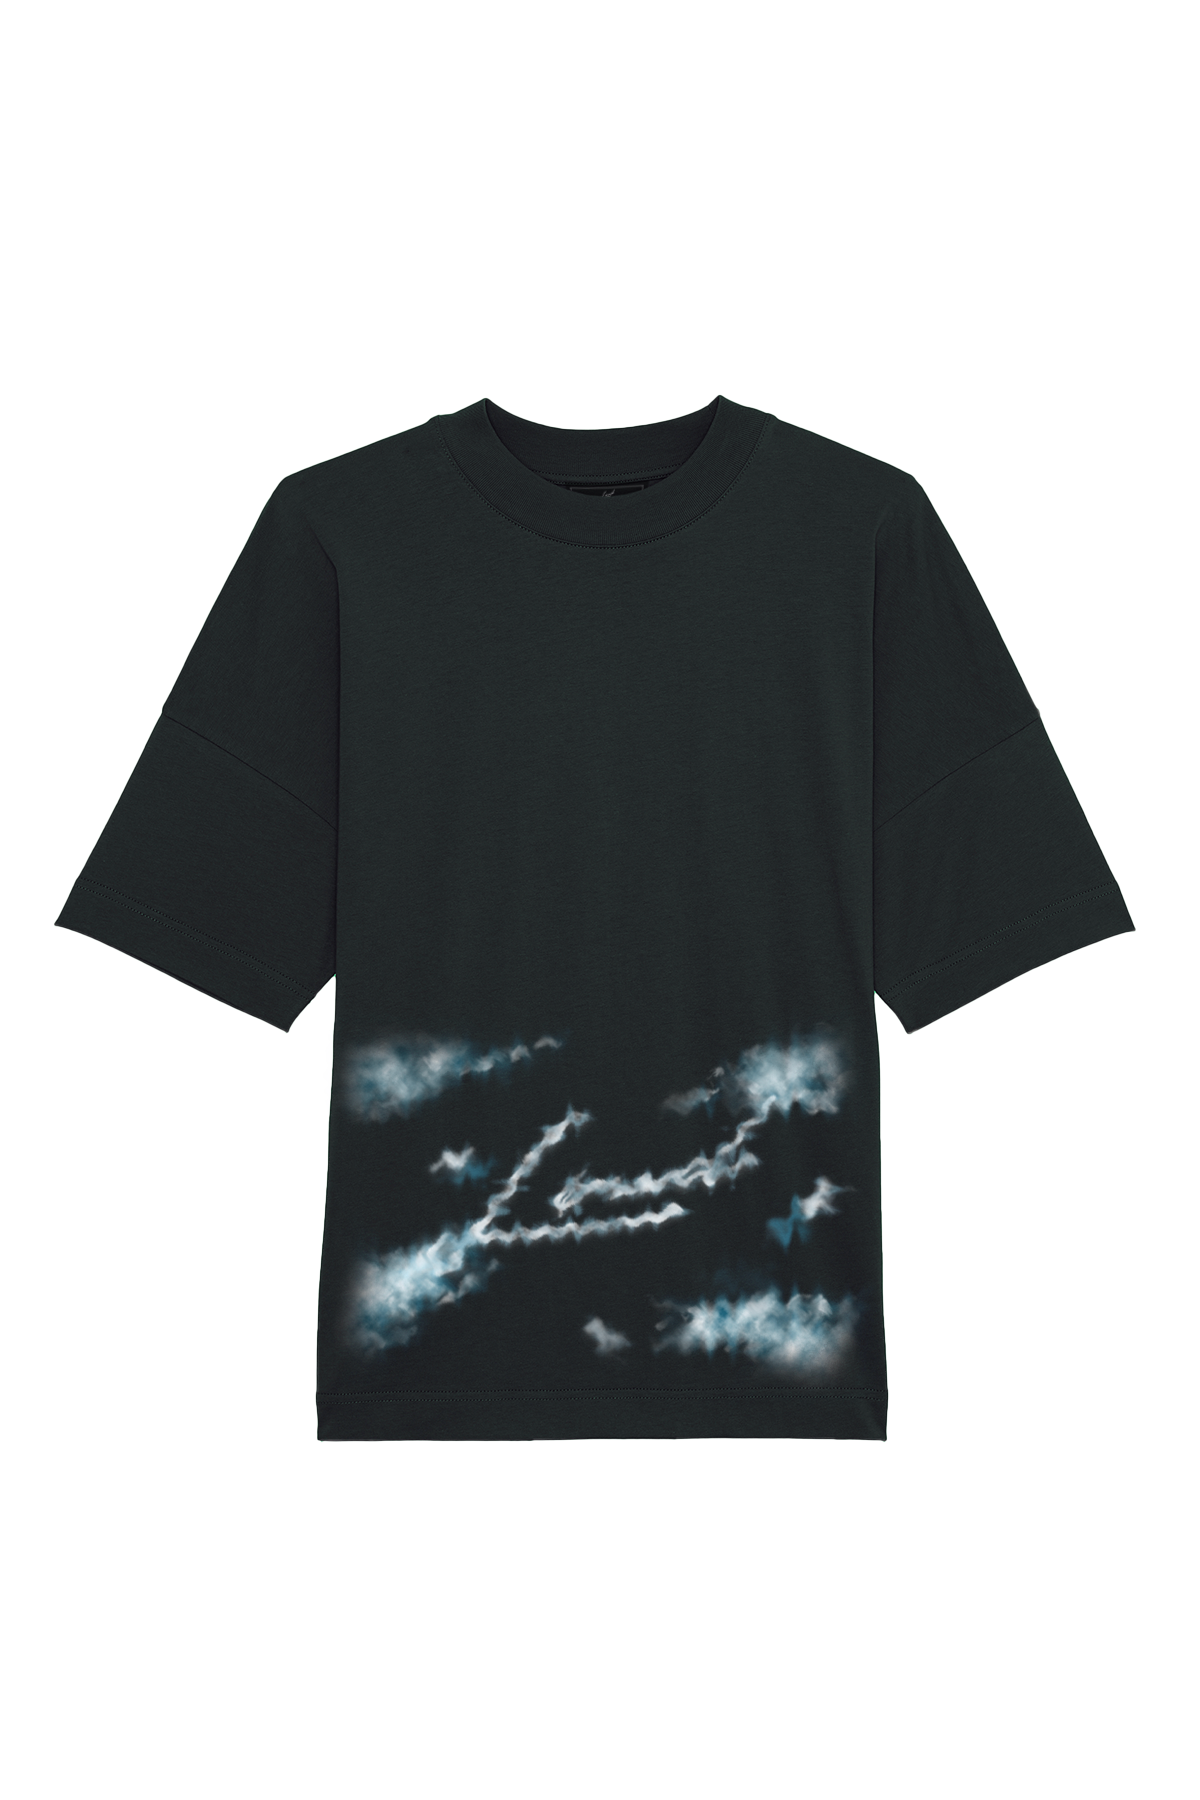 Loud Signature Cloud Logo - Black T-Shirt - Live Look Loud